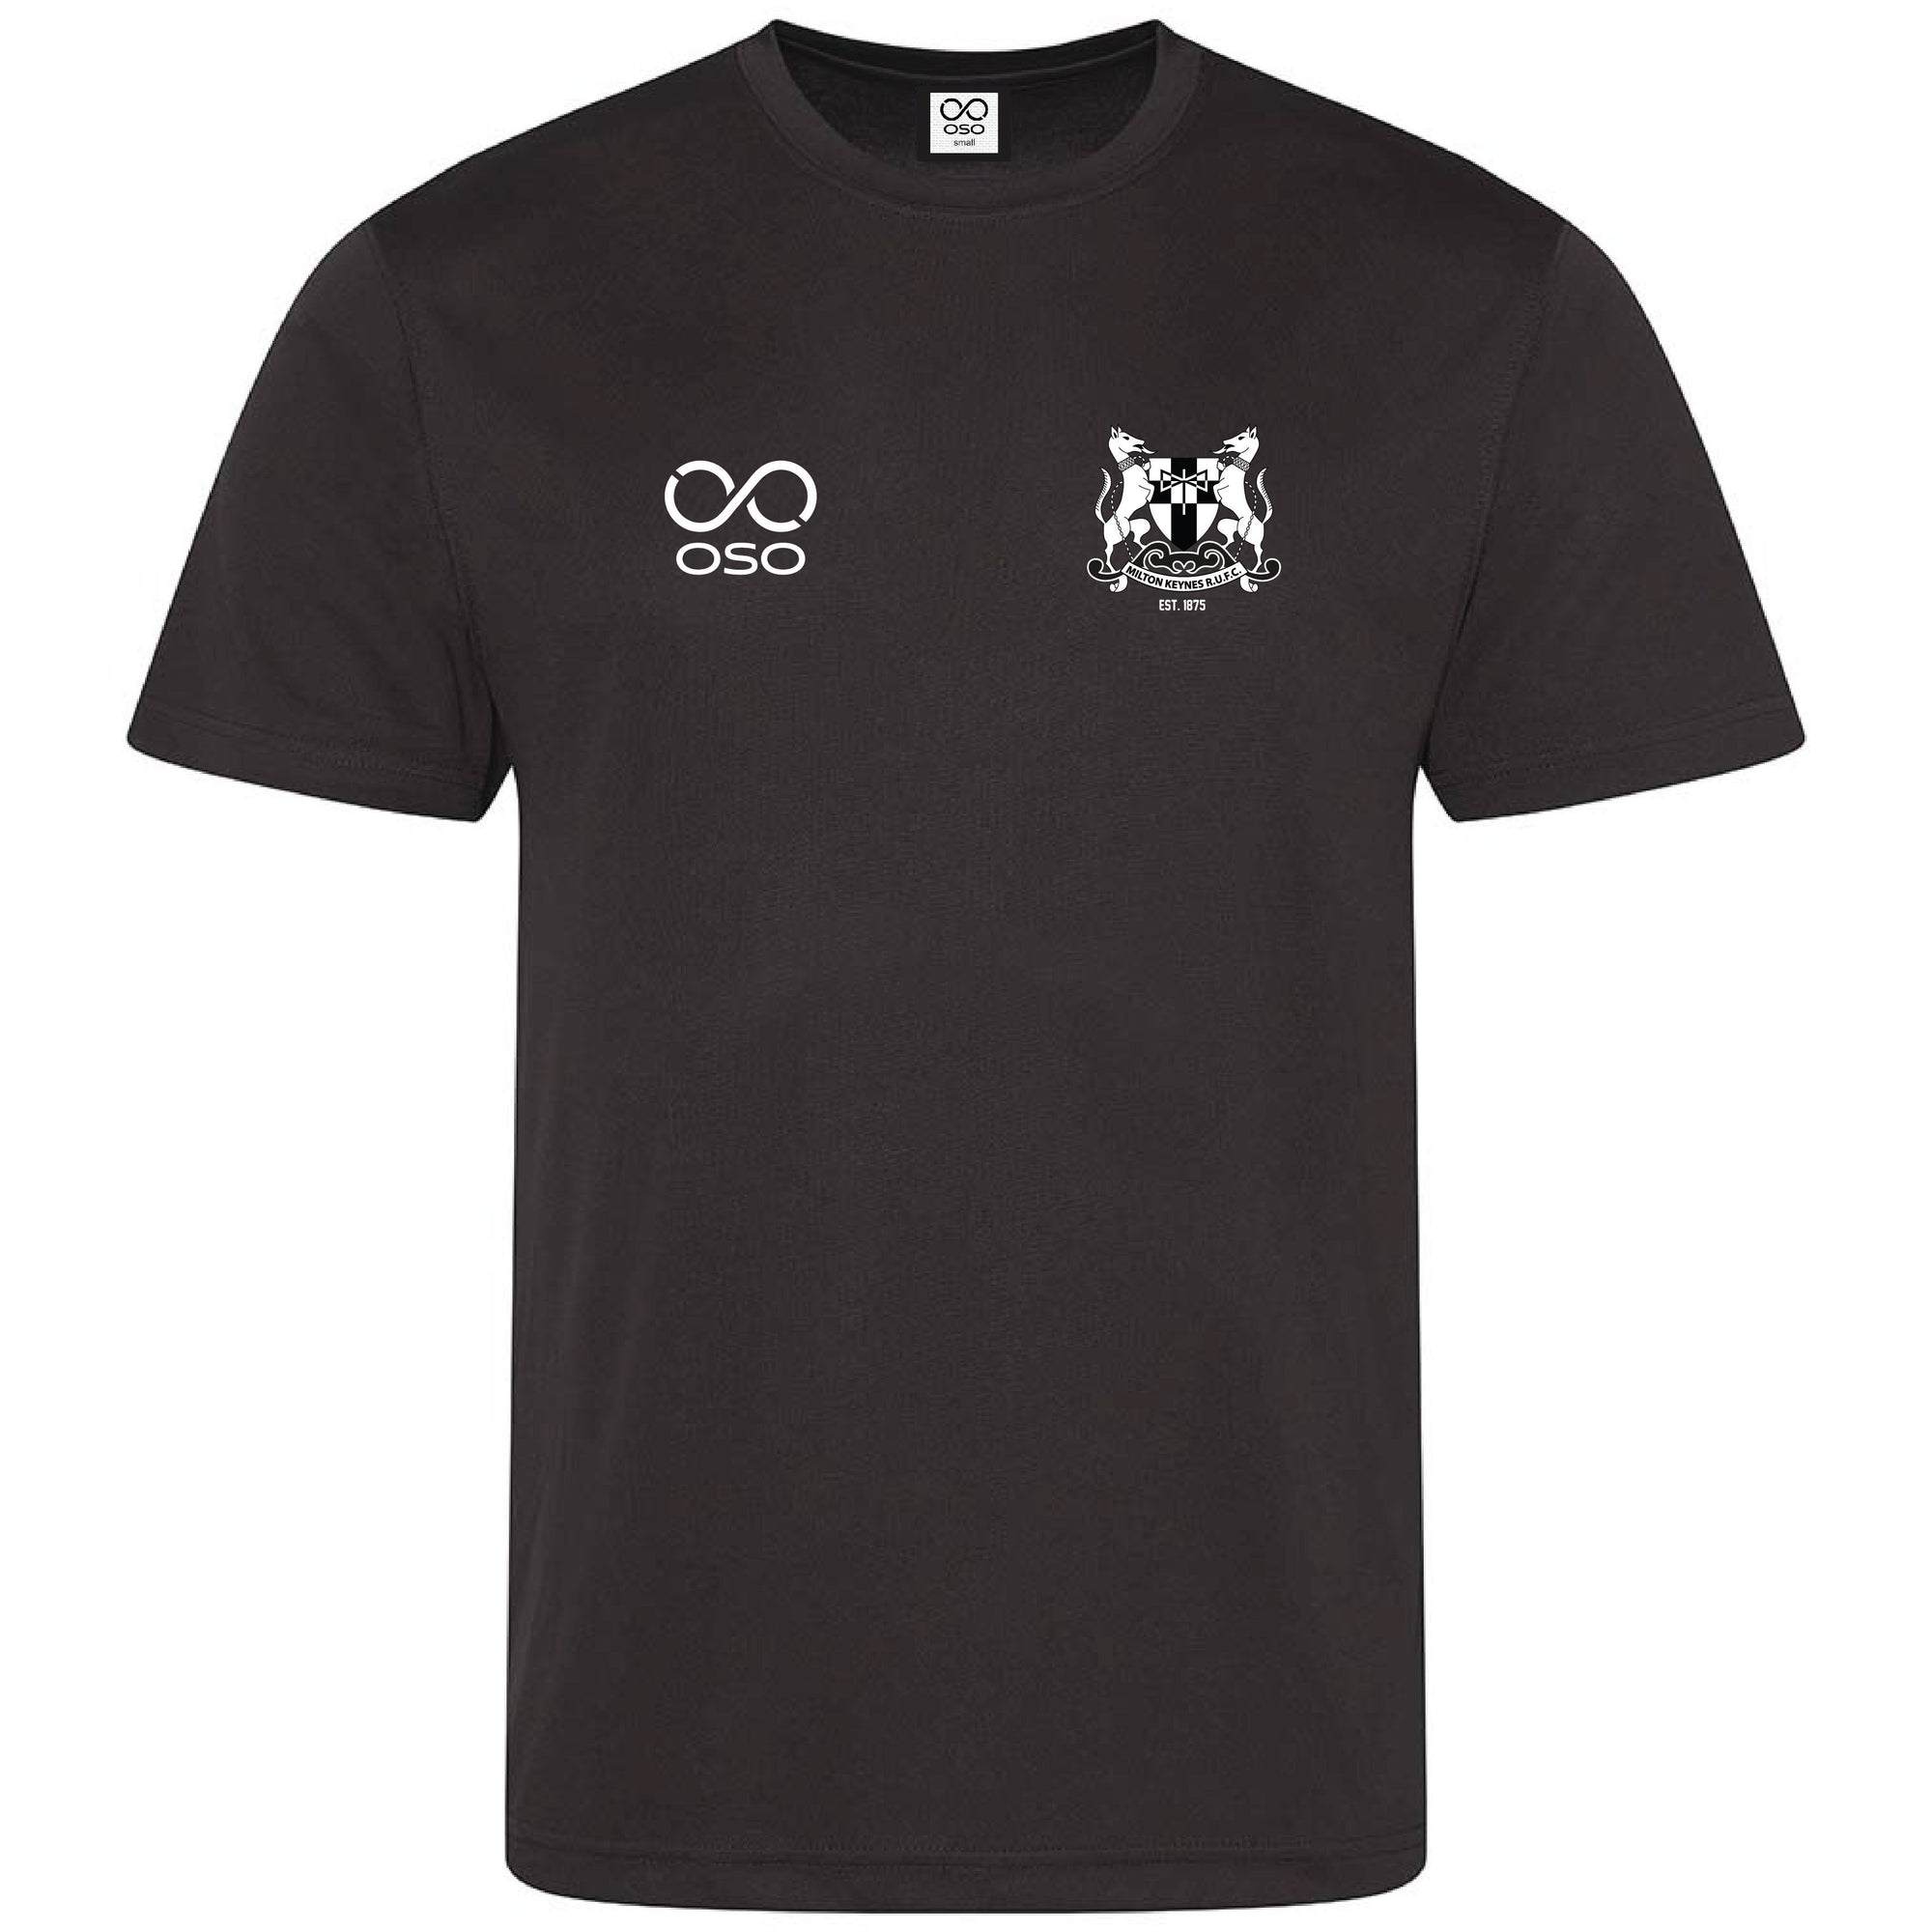 MKRUFC Sports T-shirt - Black